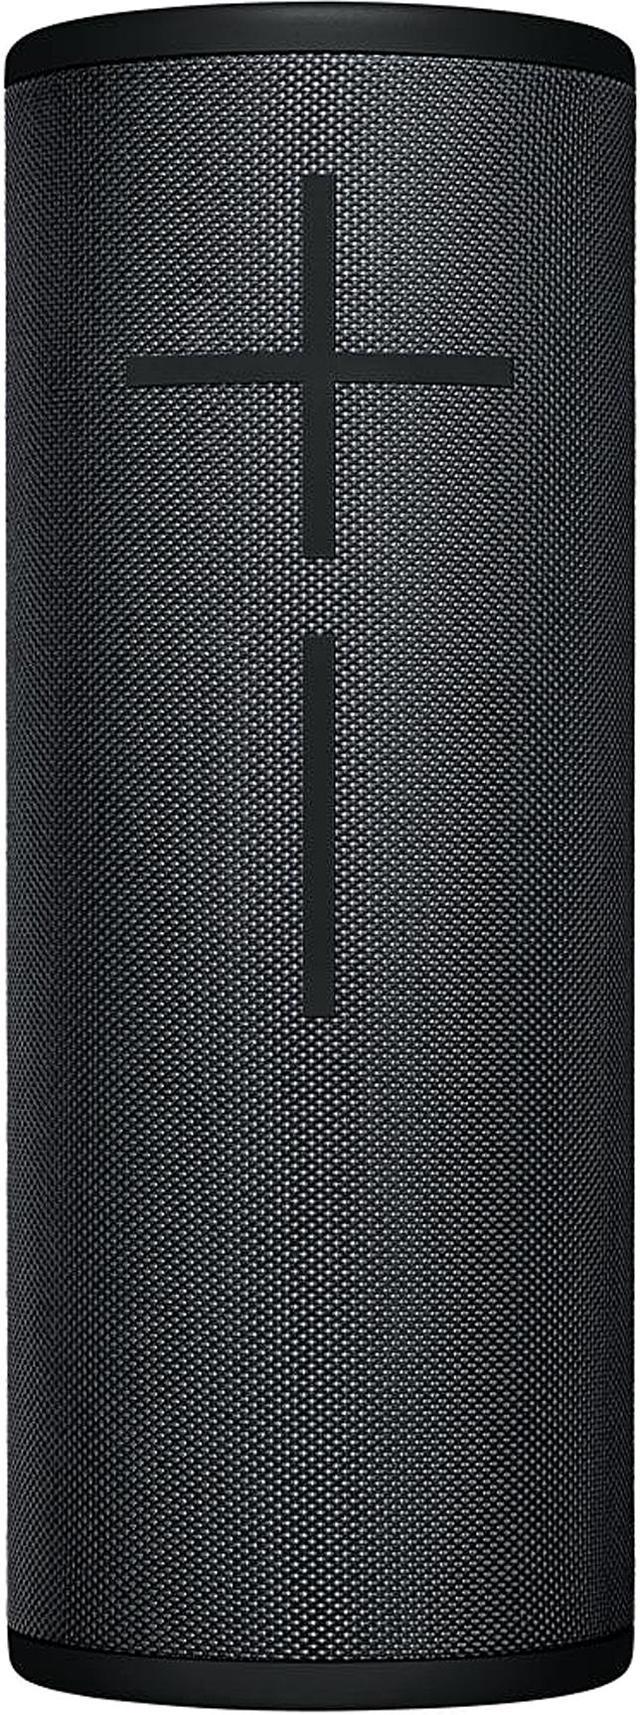 Ultimate Ears Megaboom 3 Wireless Speaker - Black